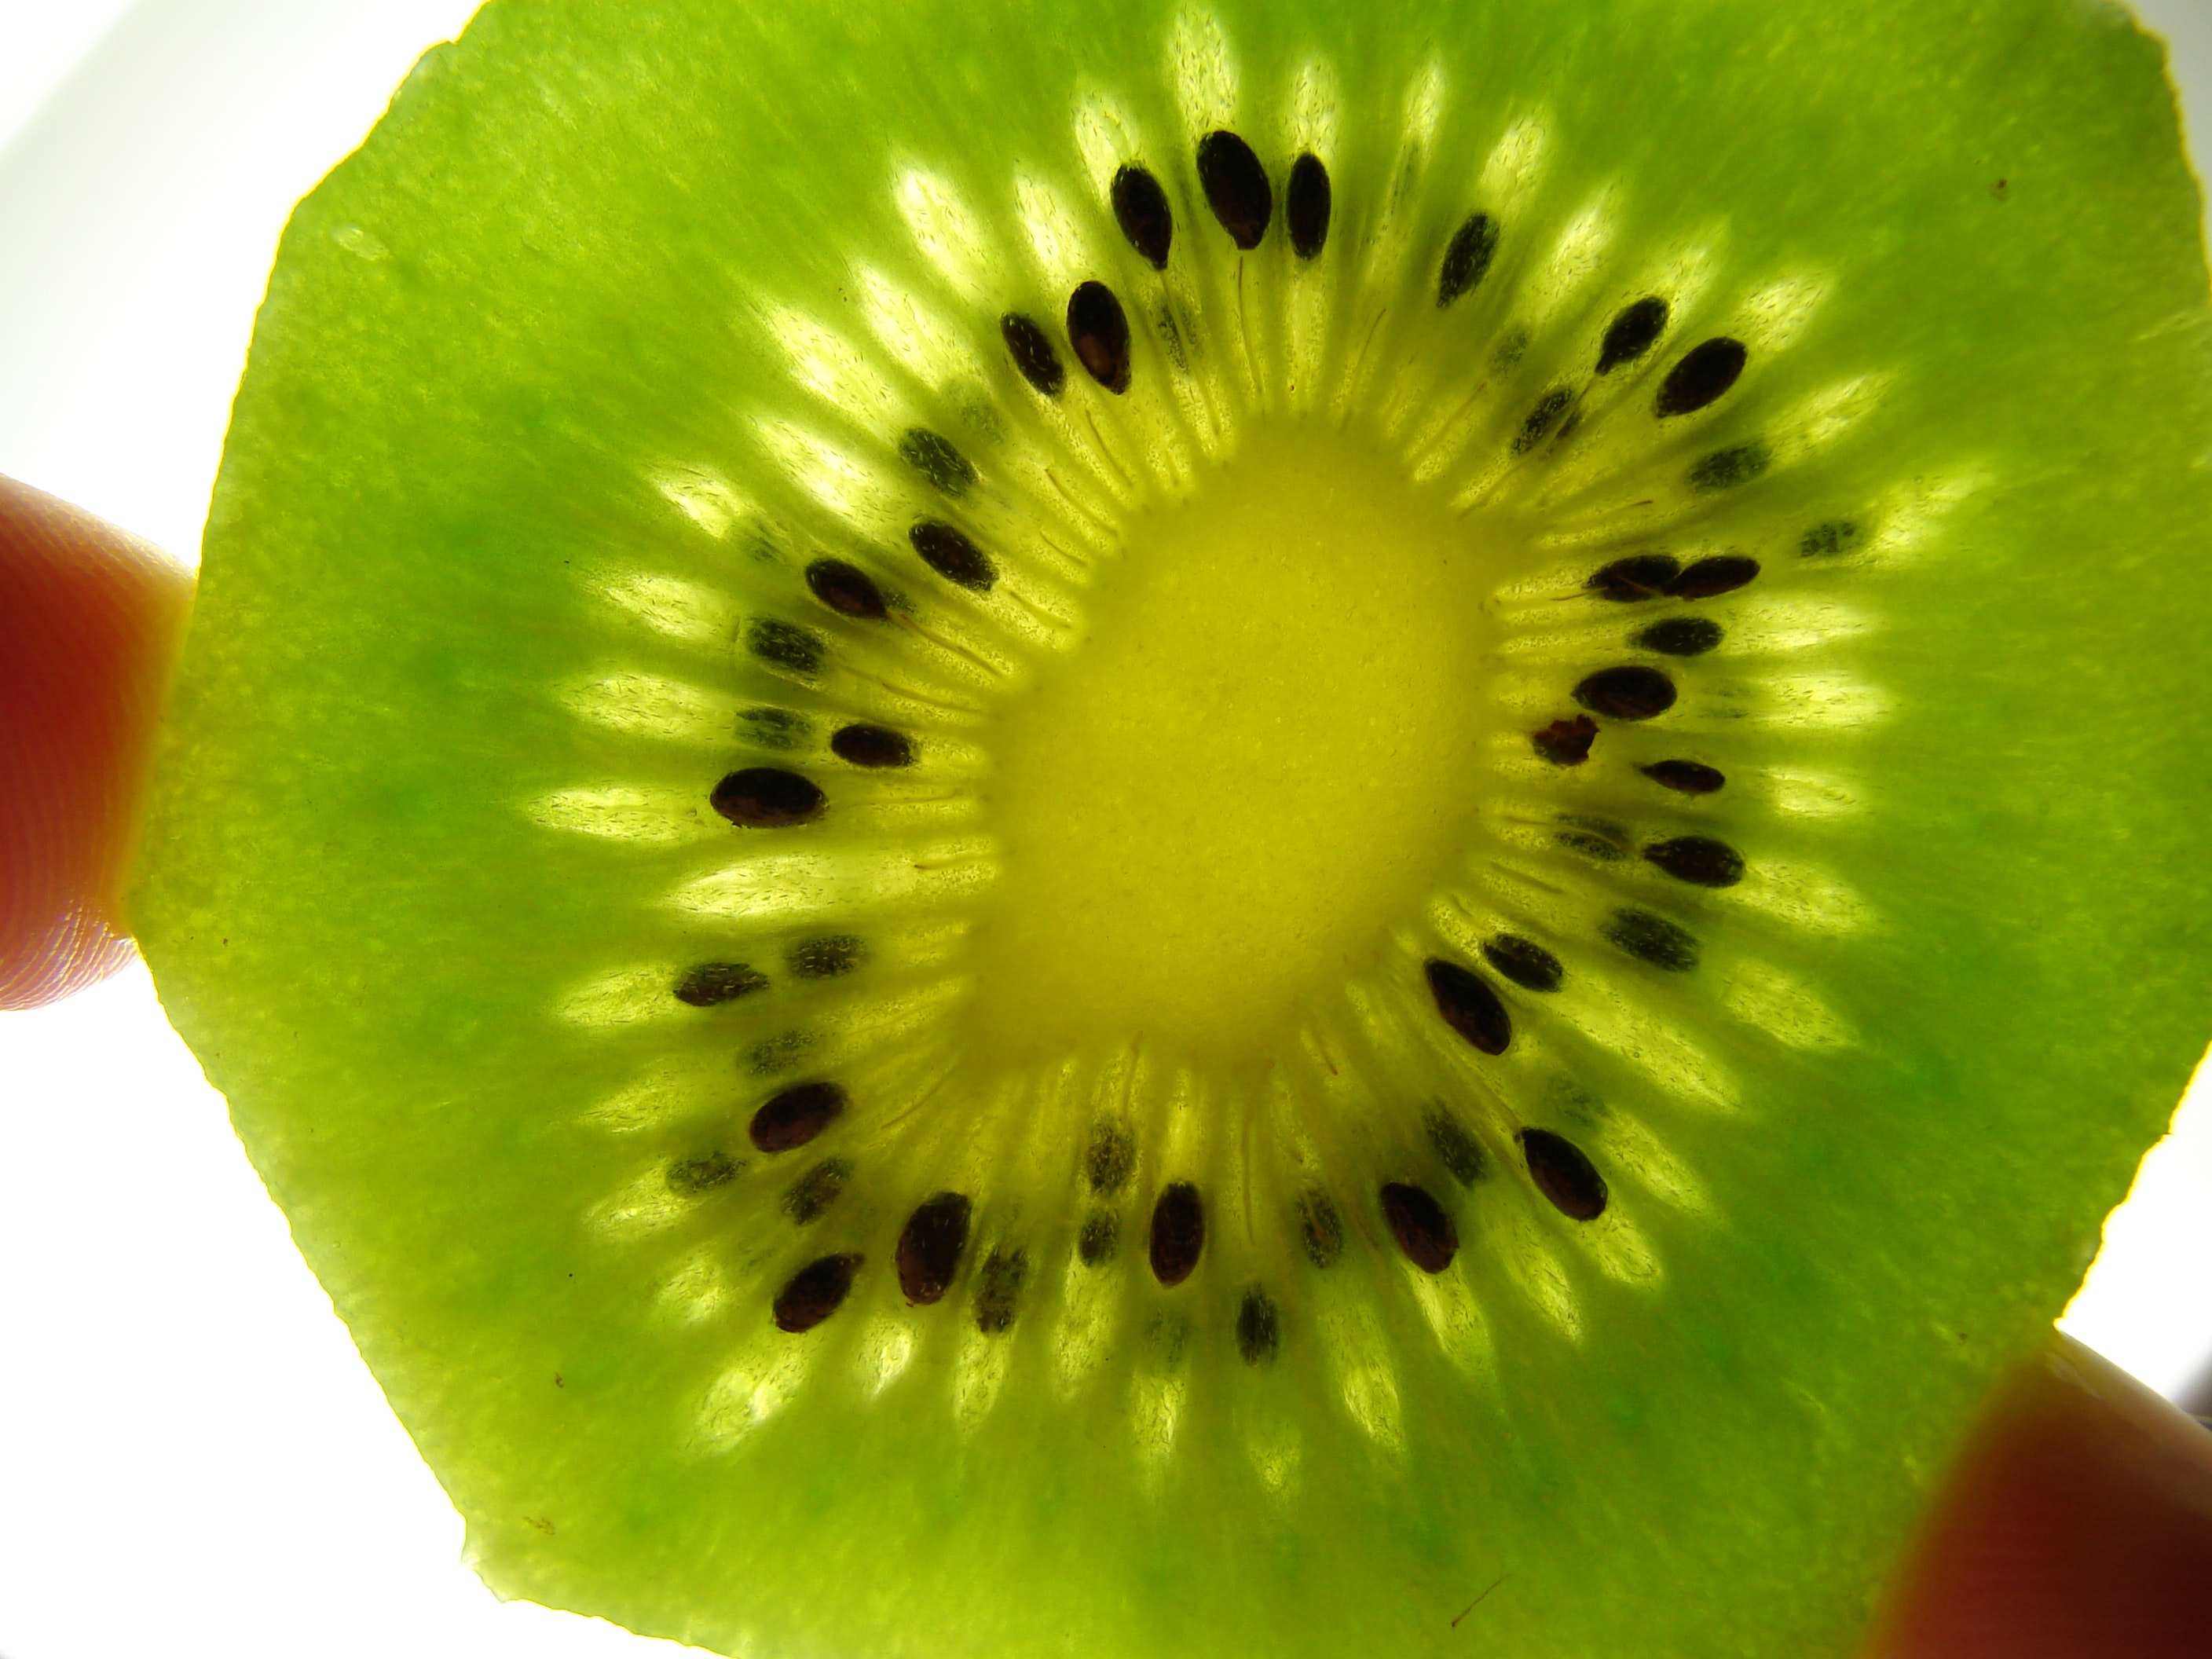 Free stock photo of close-up view, fruit, kiwi